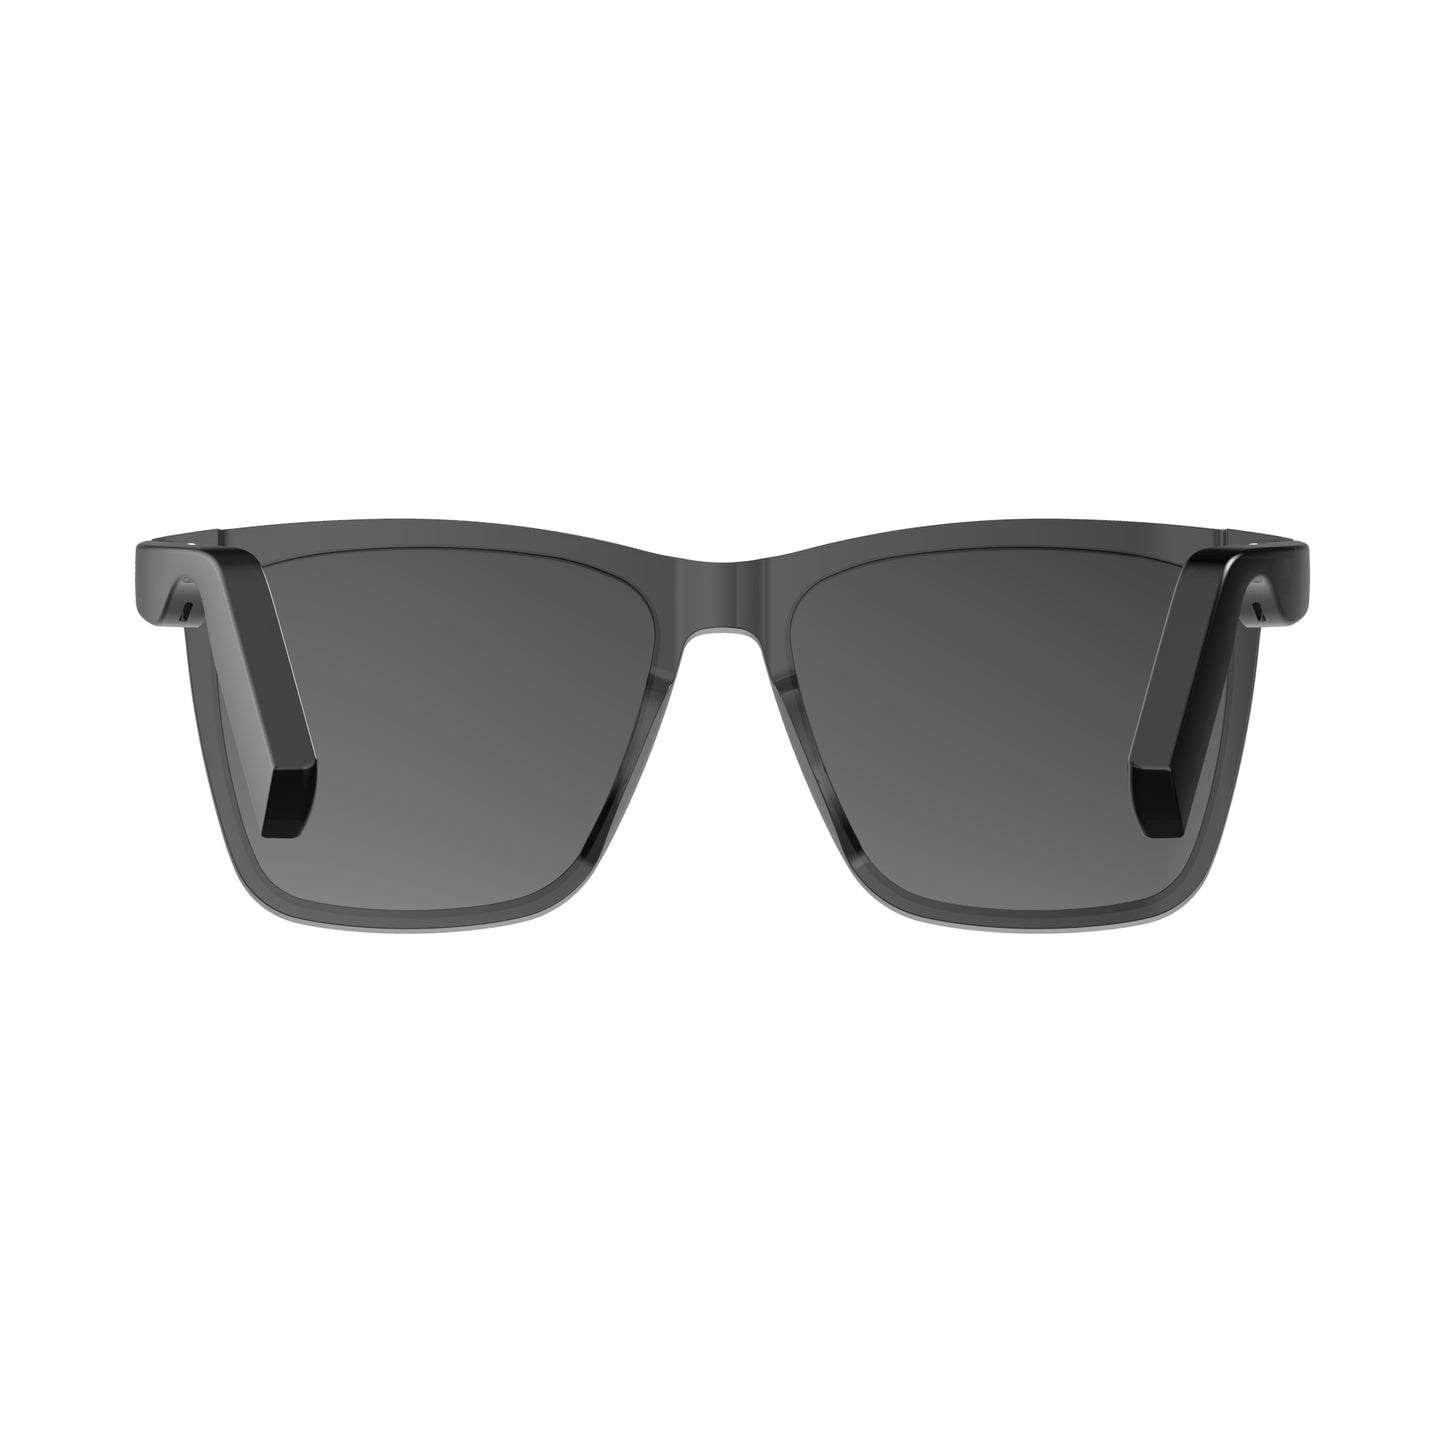 Fleek - Smart Eyewear Cool 1.0